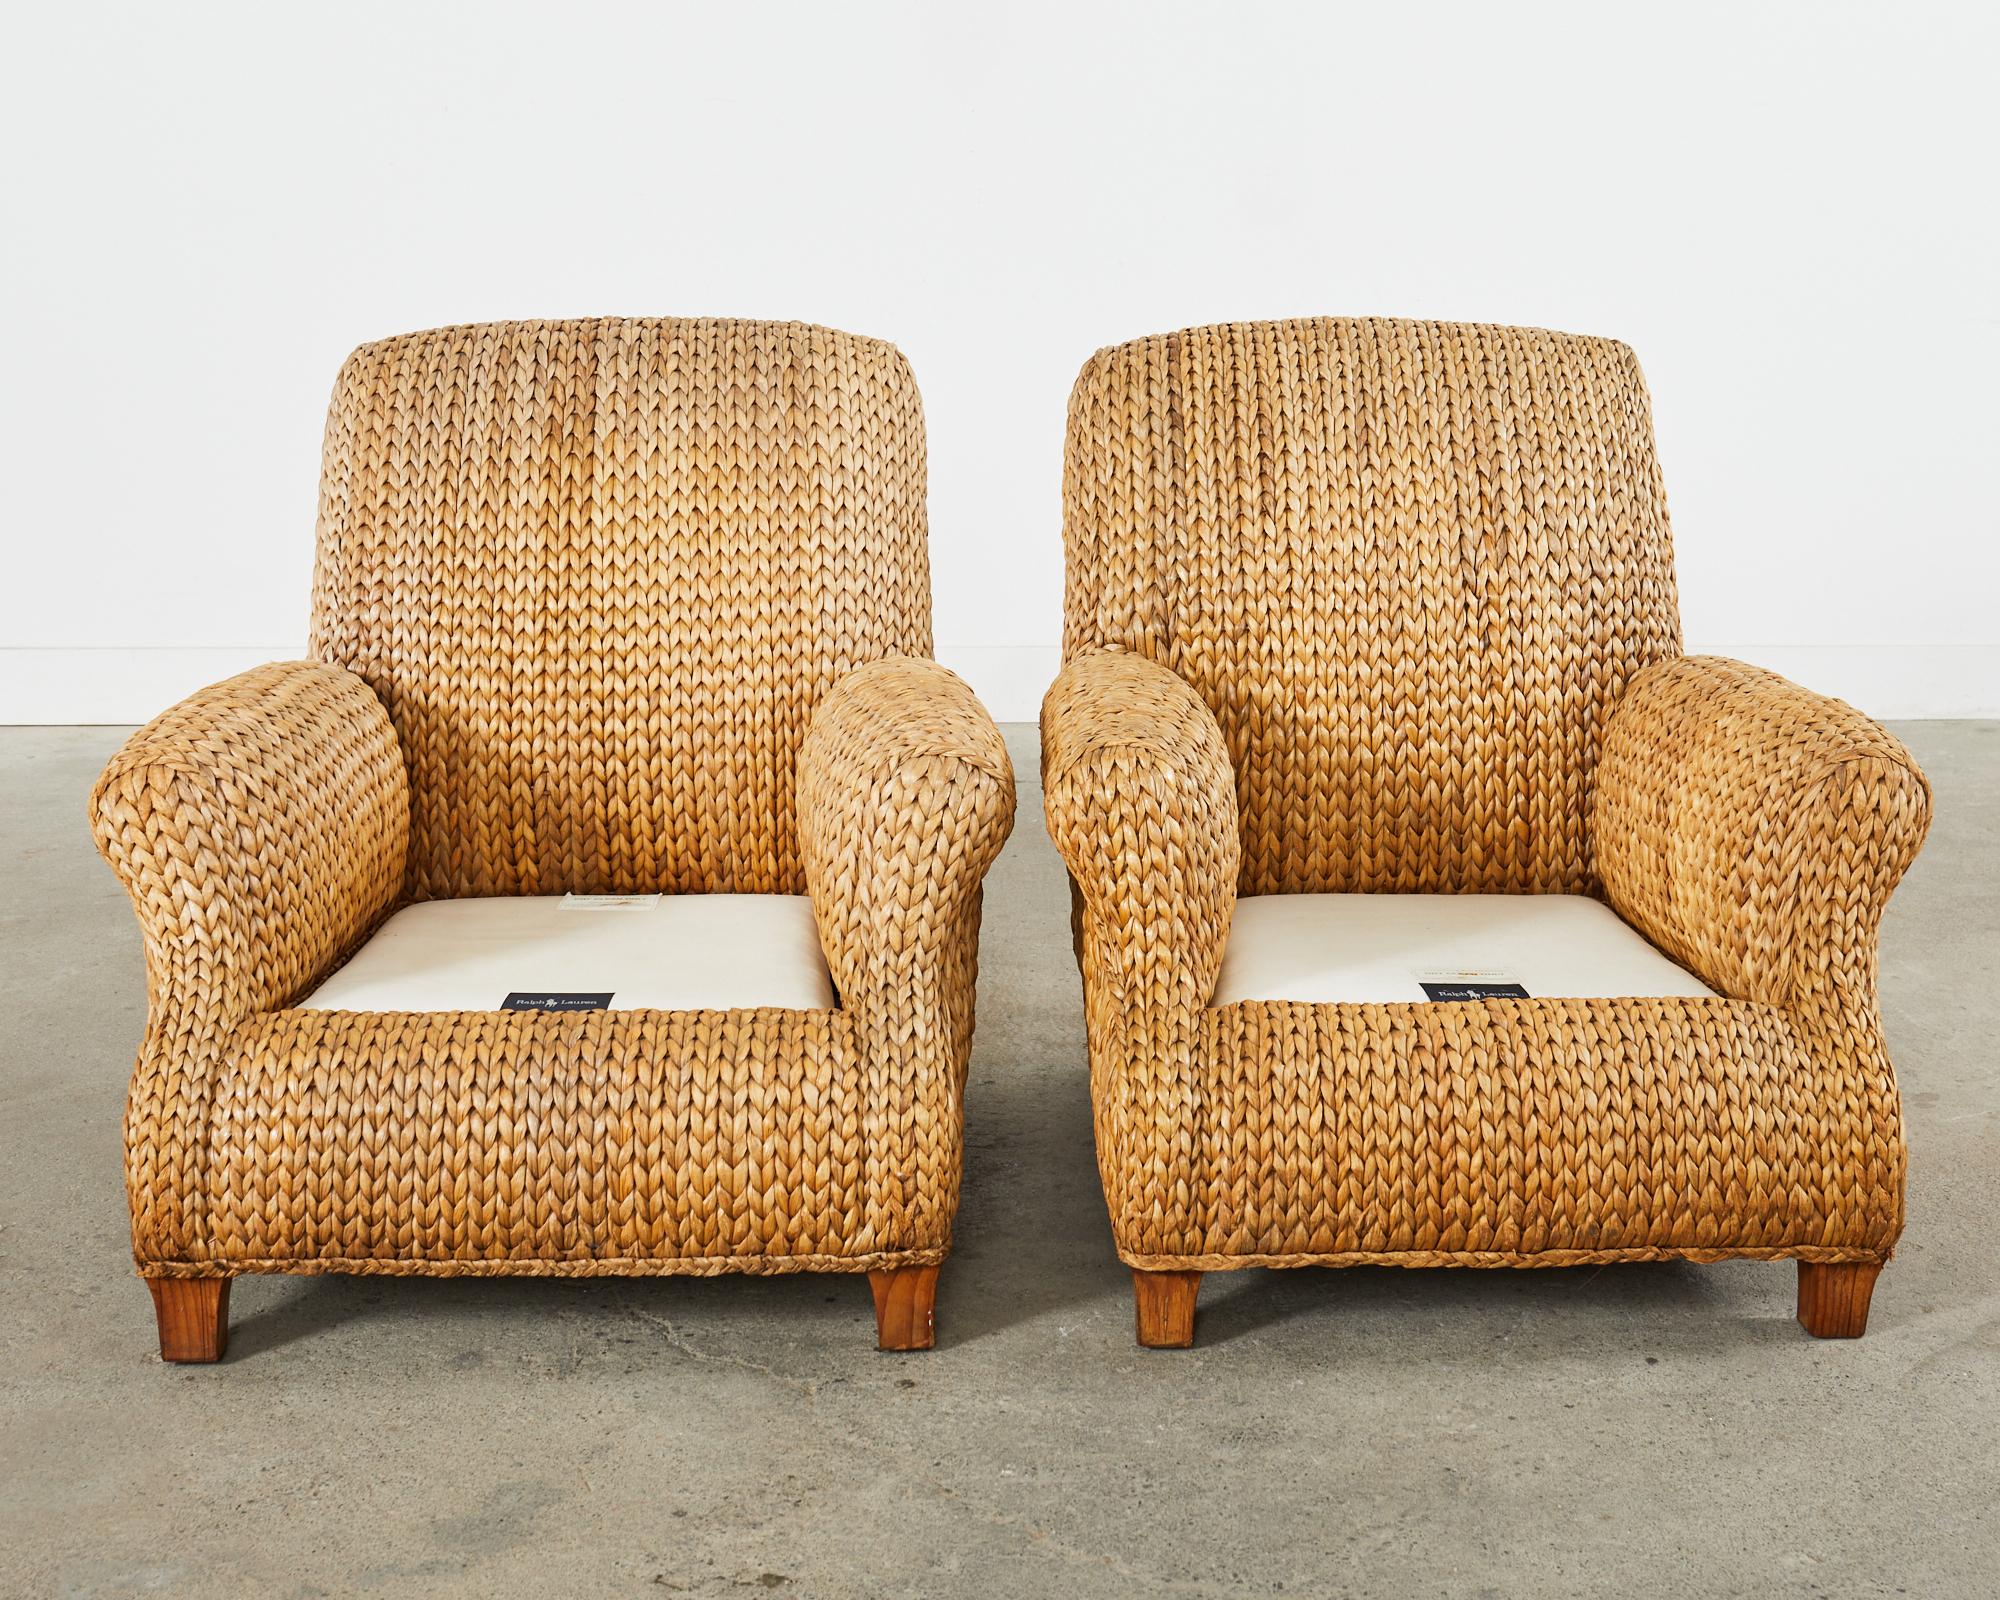 Rattan Pair of Ralph Lauren Organic Modern Seagrass Lounge Chairs